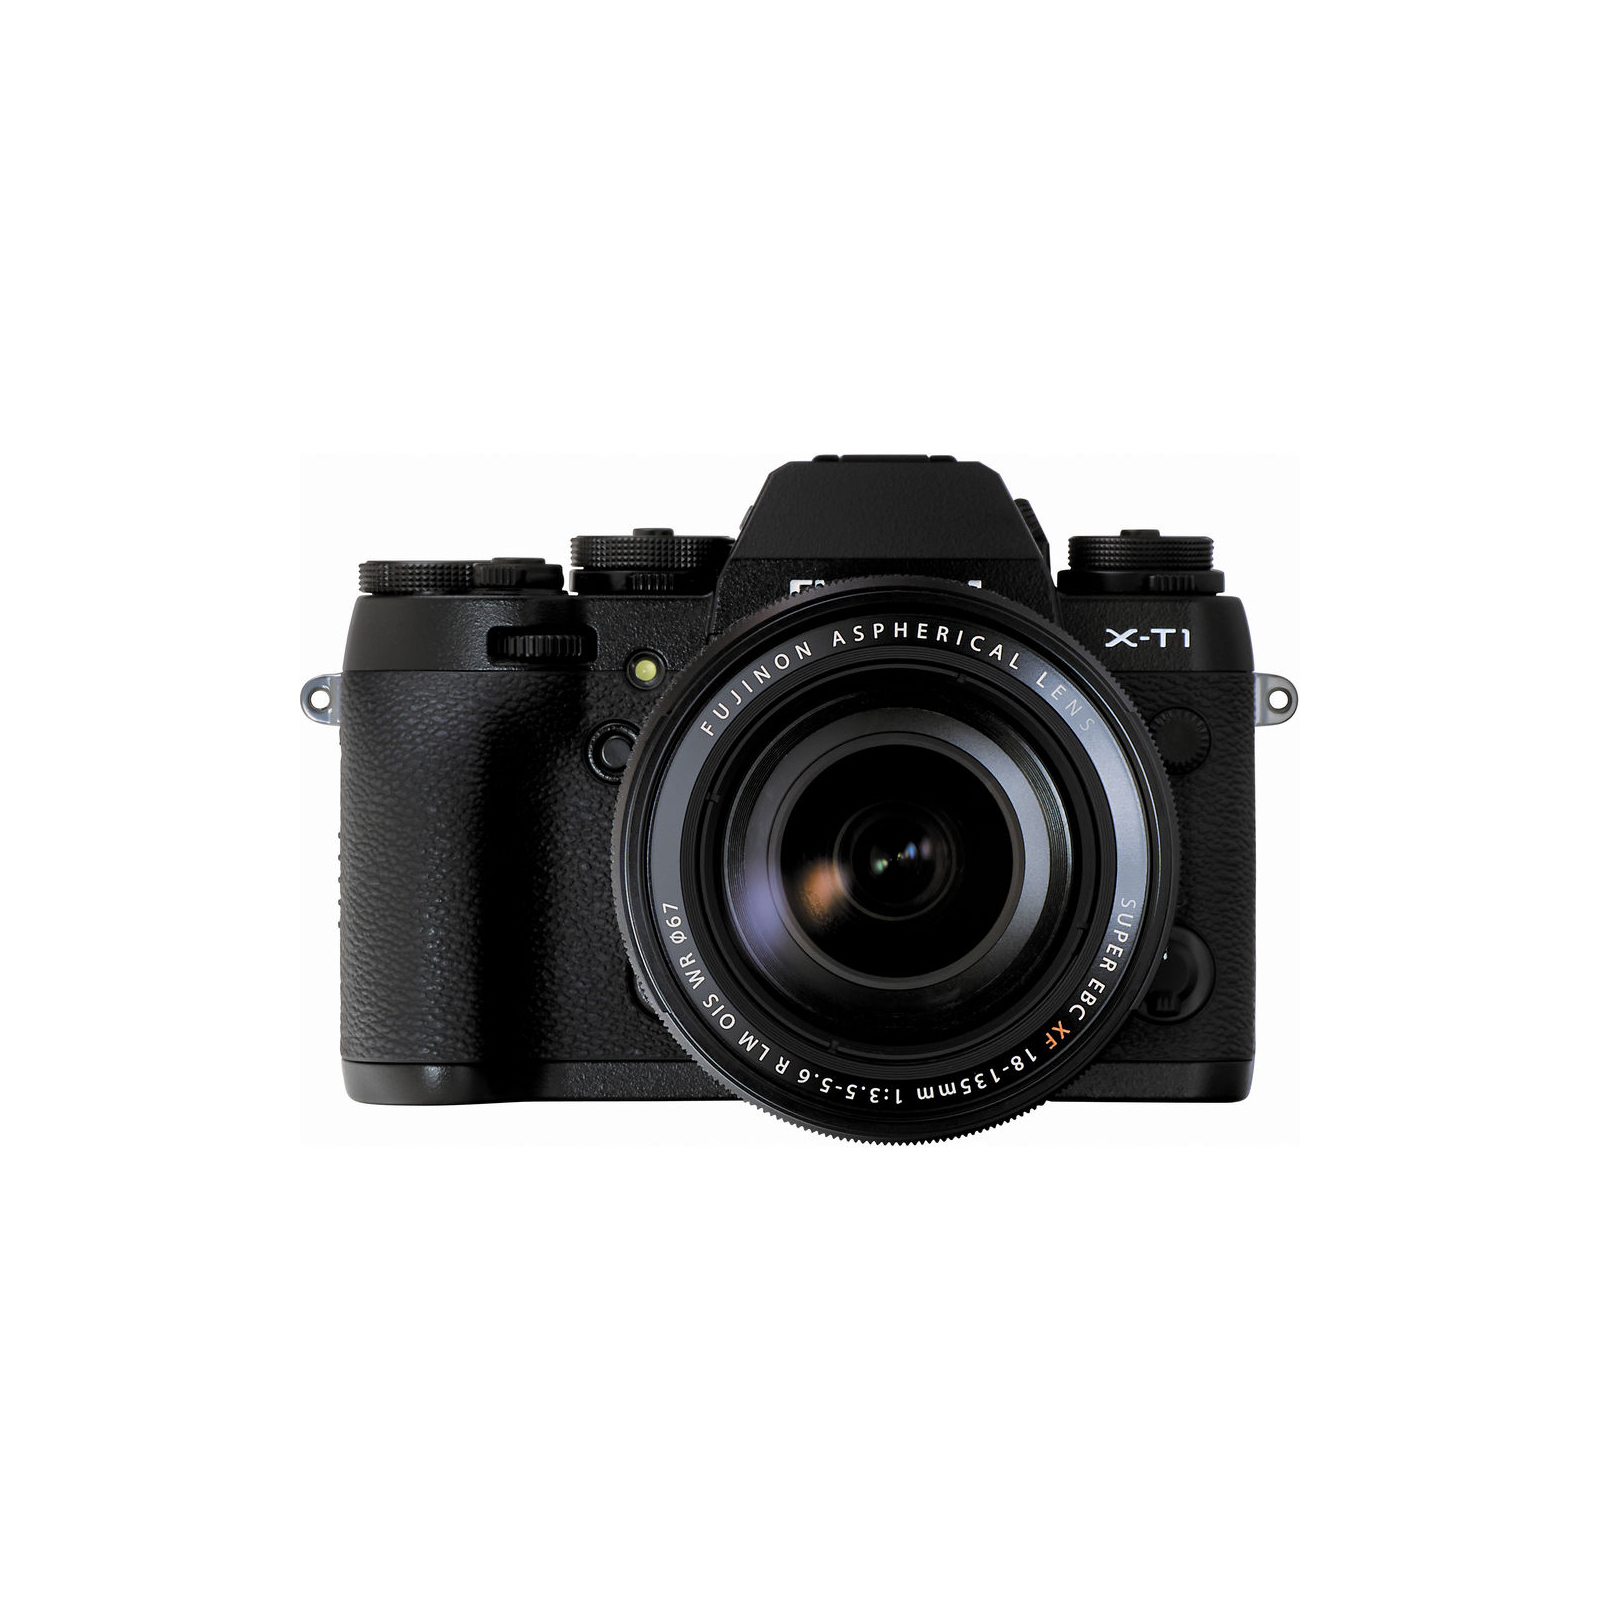 Цифровой фотоаппарат Fujifilm X-T1 XF 18-135 Black Kit (16432815) изображение 4